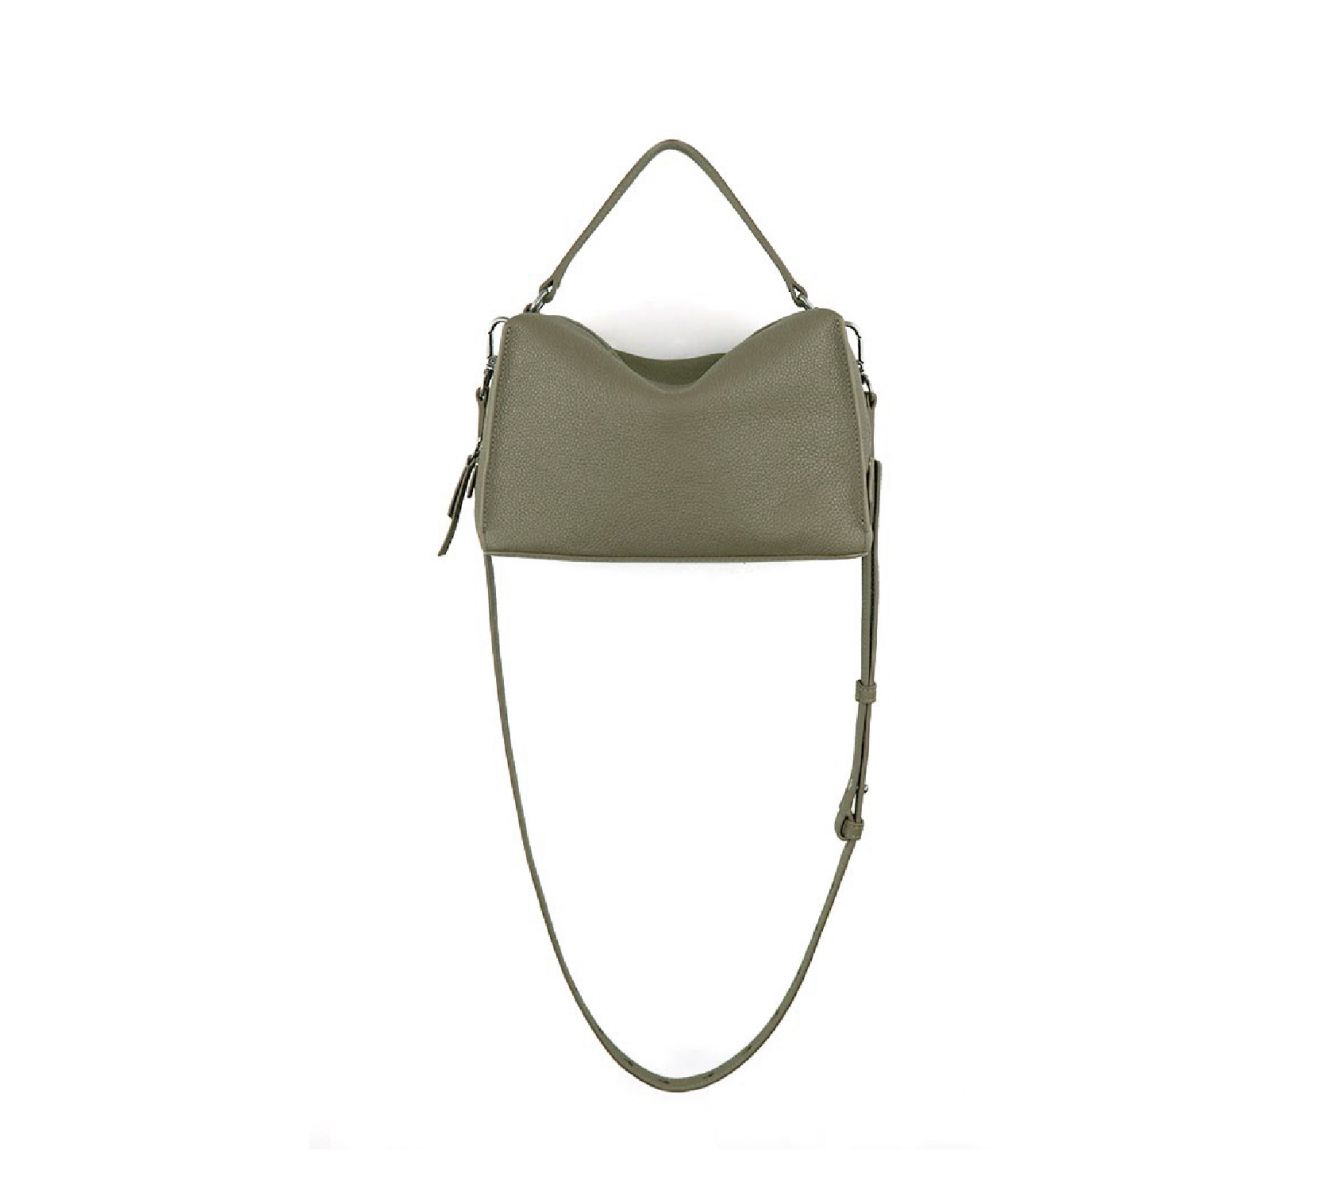 Mini Valley Cube Shoulder Bags 迷你方型軟包-Olive Greene 橄欖綠